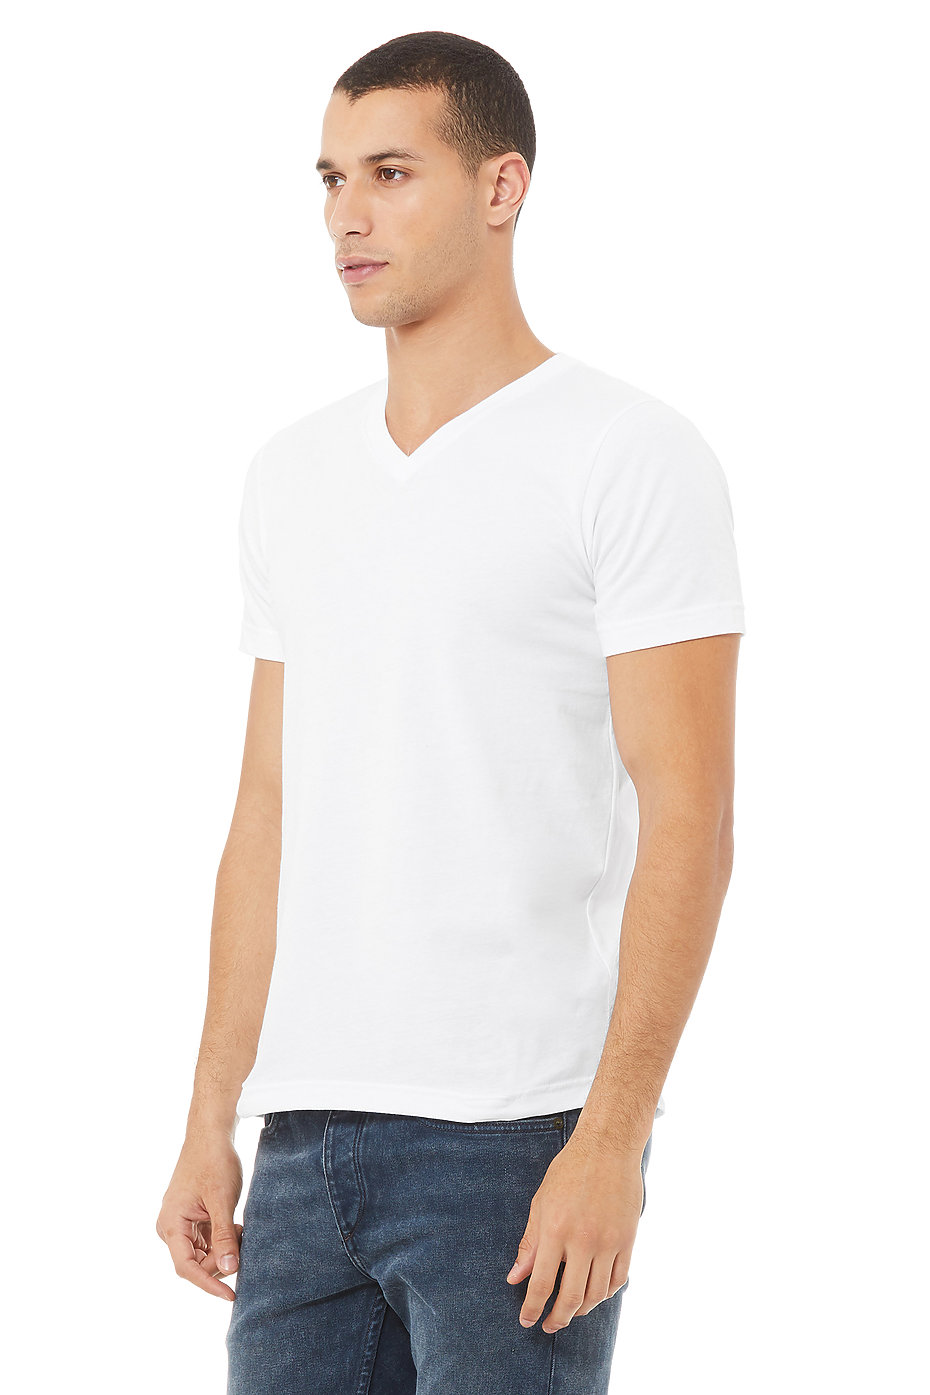 Bella Canvas Unisex Jersey Short-Sleeve V-Neck T-Shirt 2XL - Style # 3005 - Original Label White Marble 